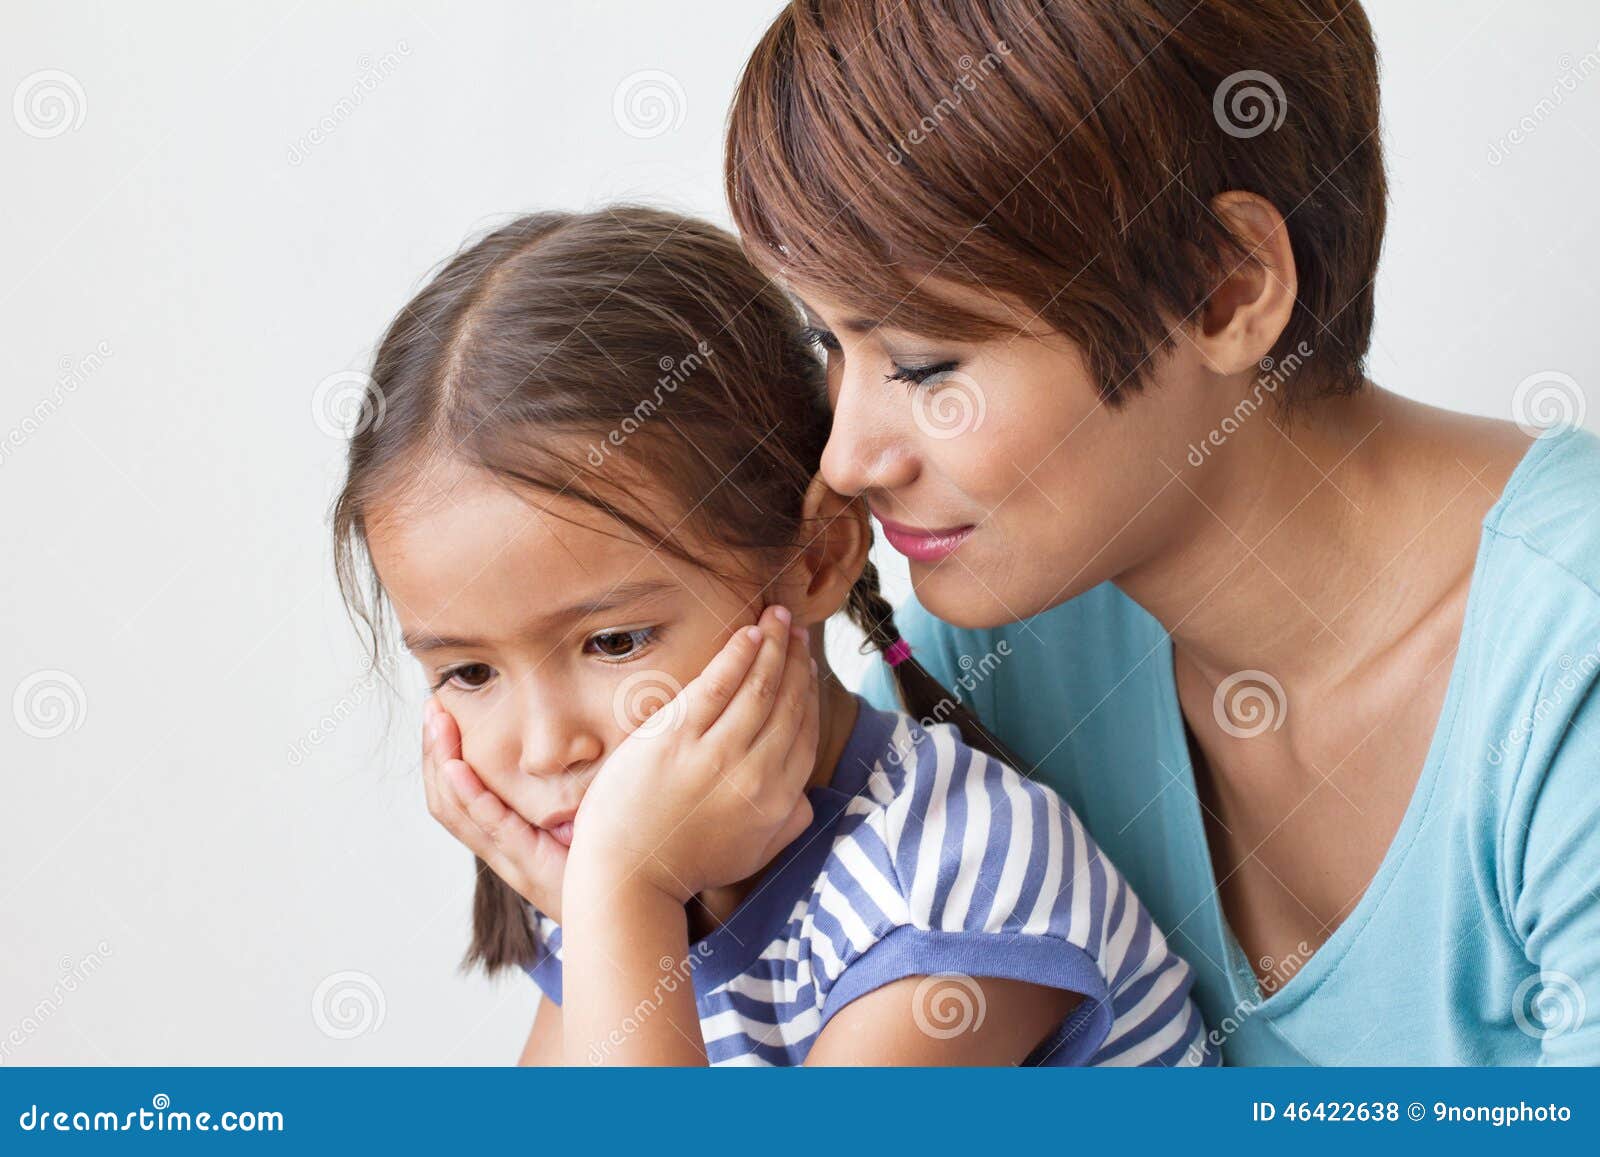 sad daughter and understanding mother